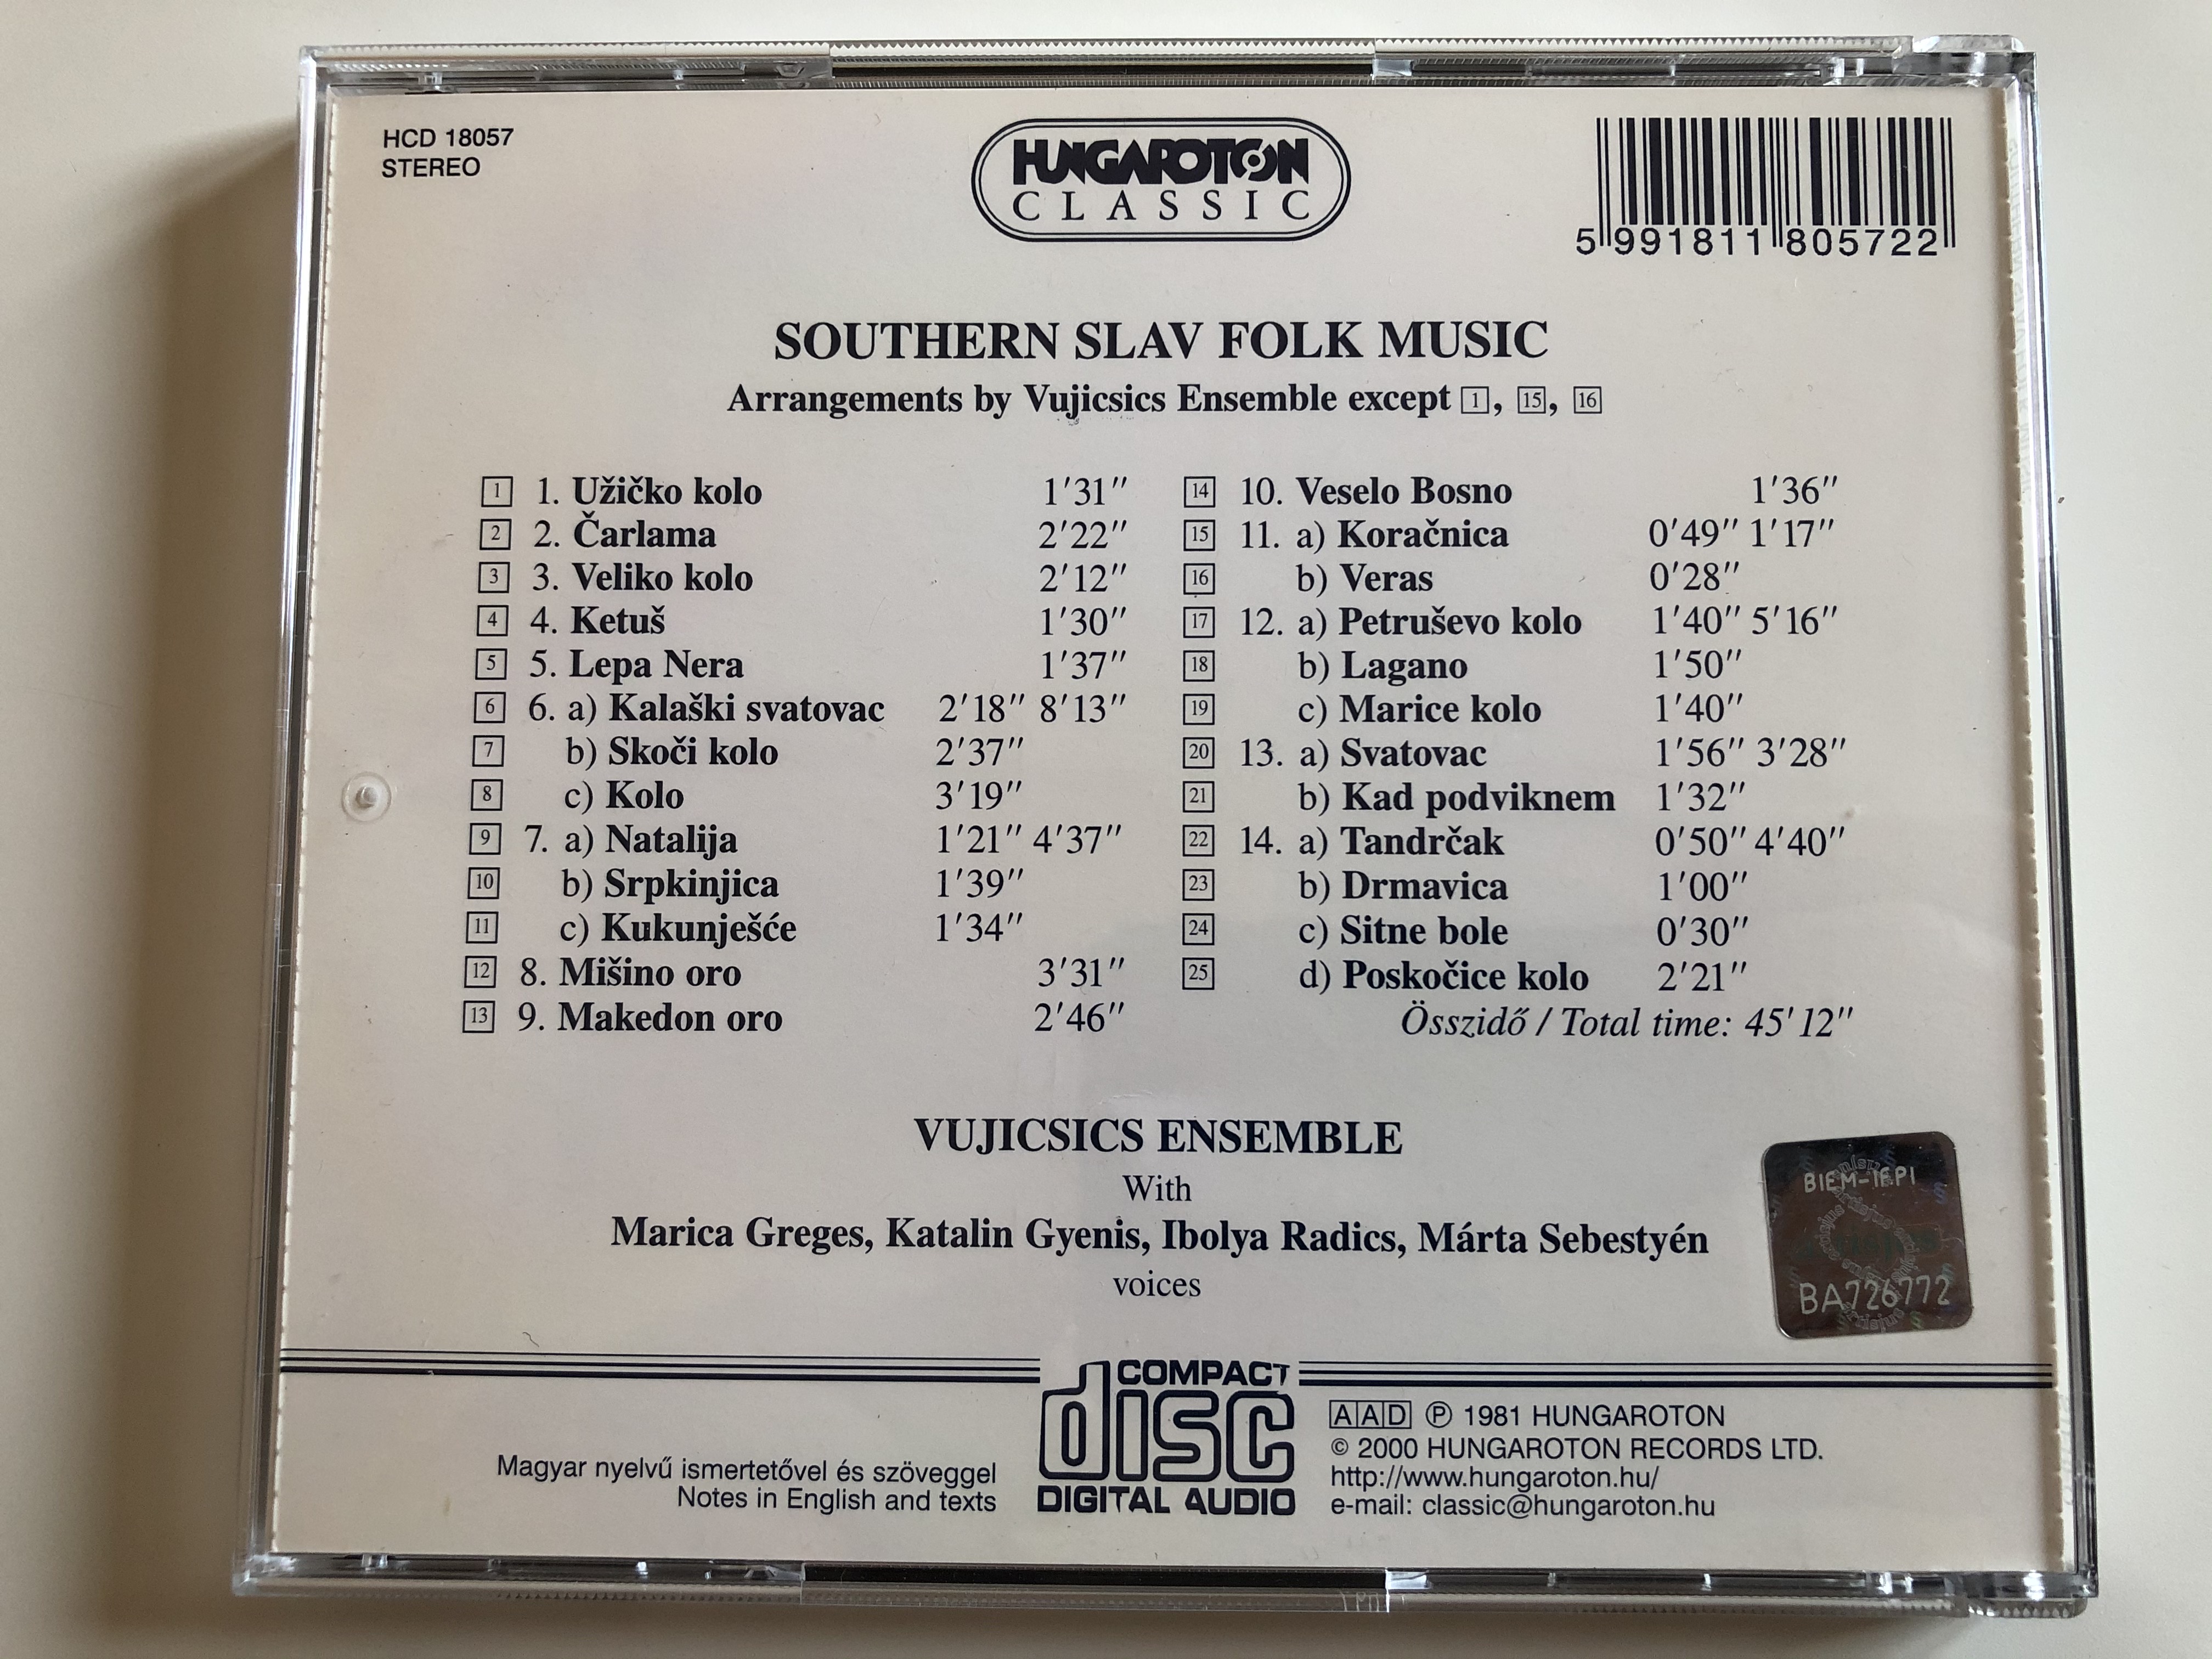 vujicsics-ensemble-southern-slav-folk-music-d-lszl-v-n-pzene-hungaroton-classic-audio-cd-2000-stereo-hcd-18057-11-.jpg